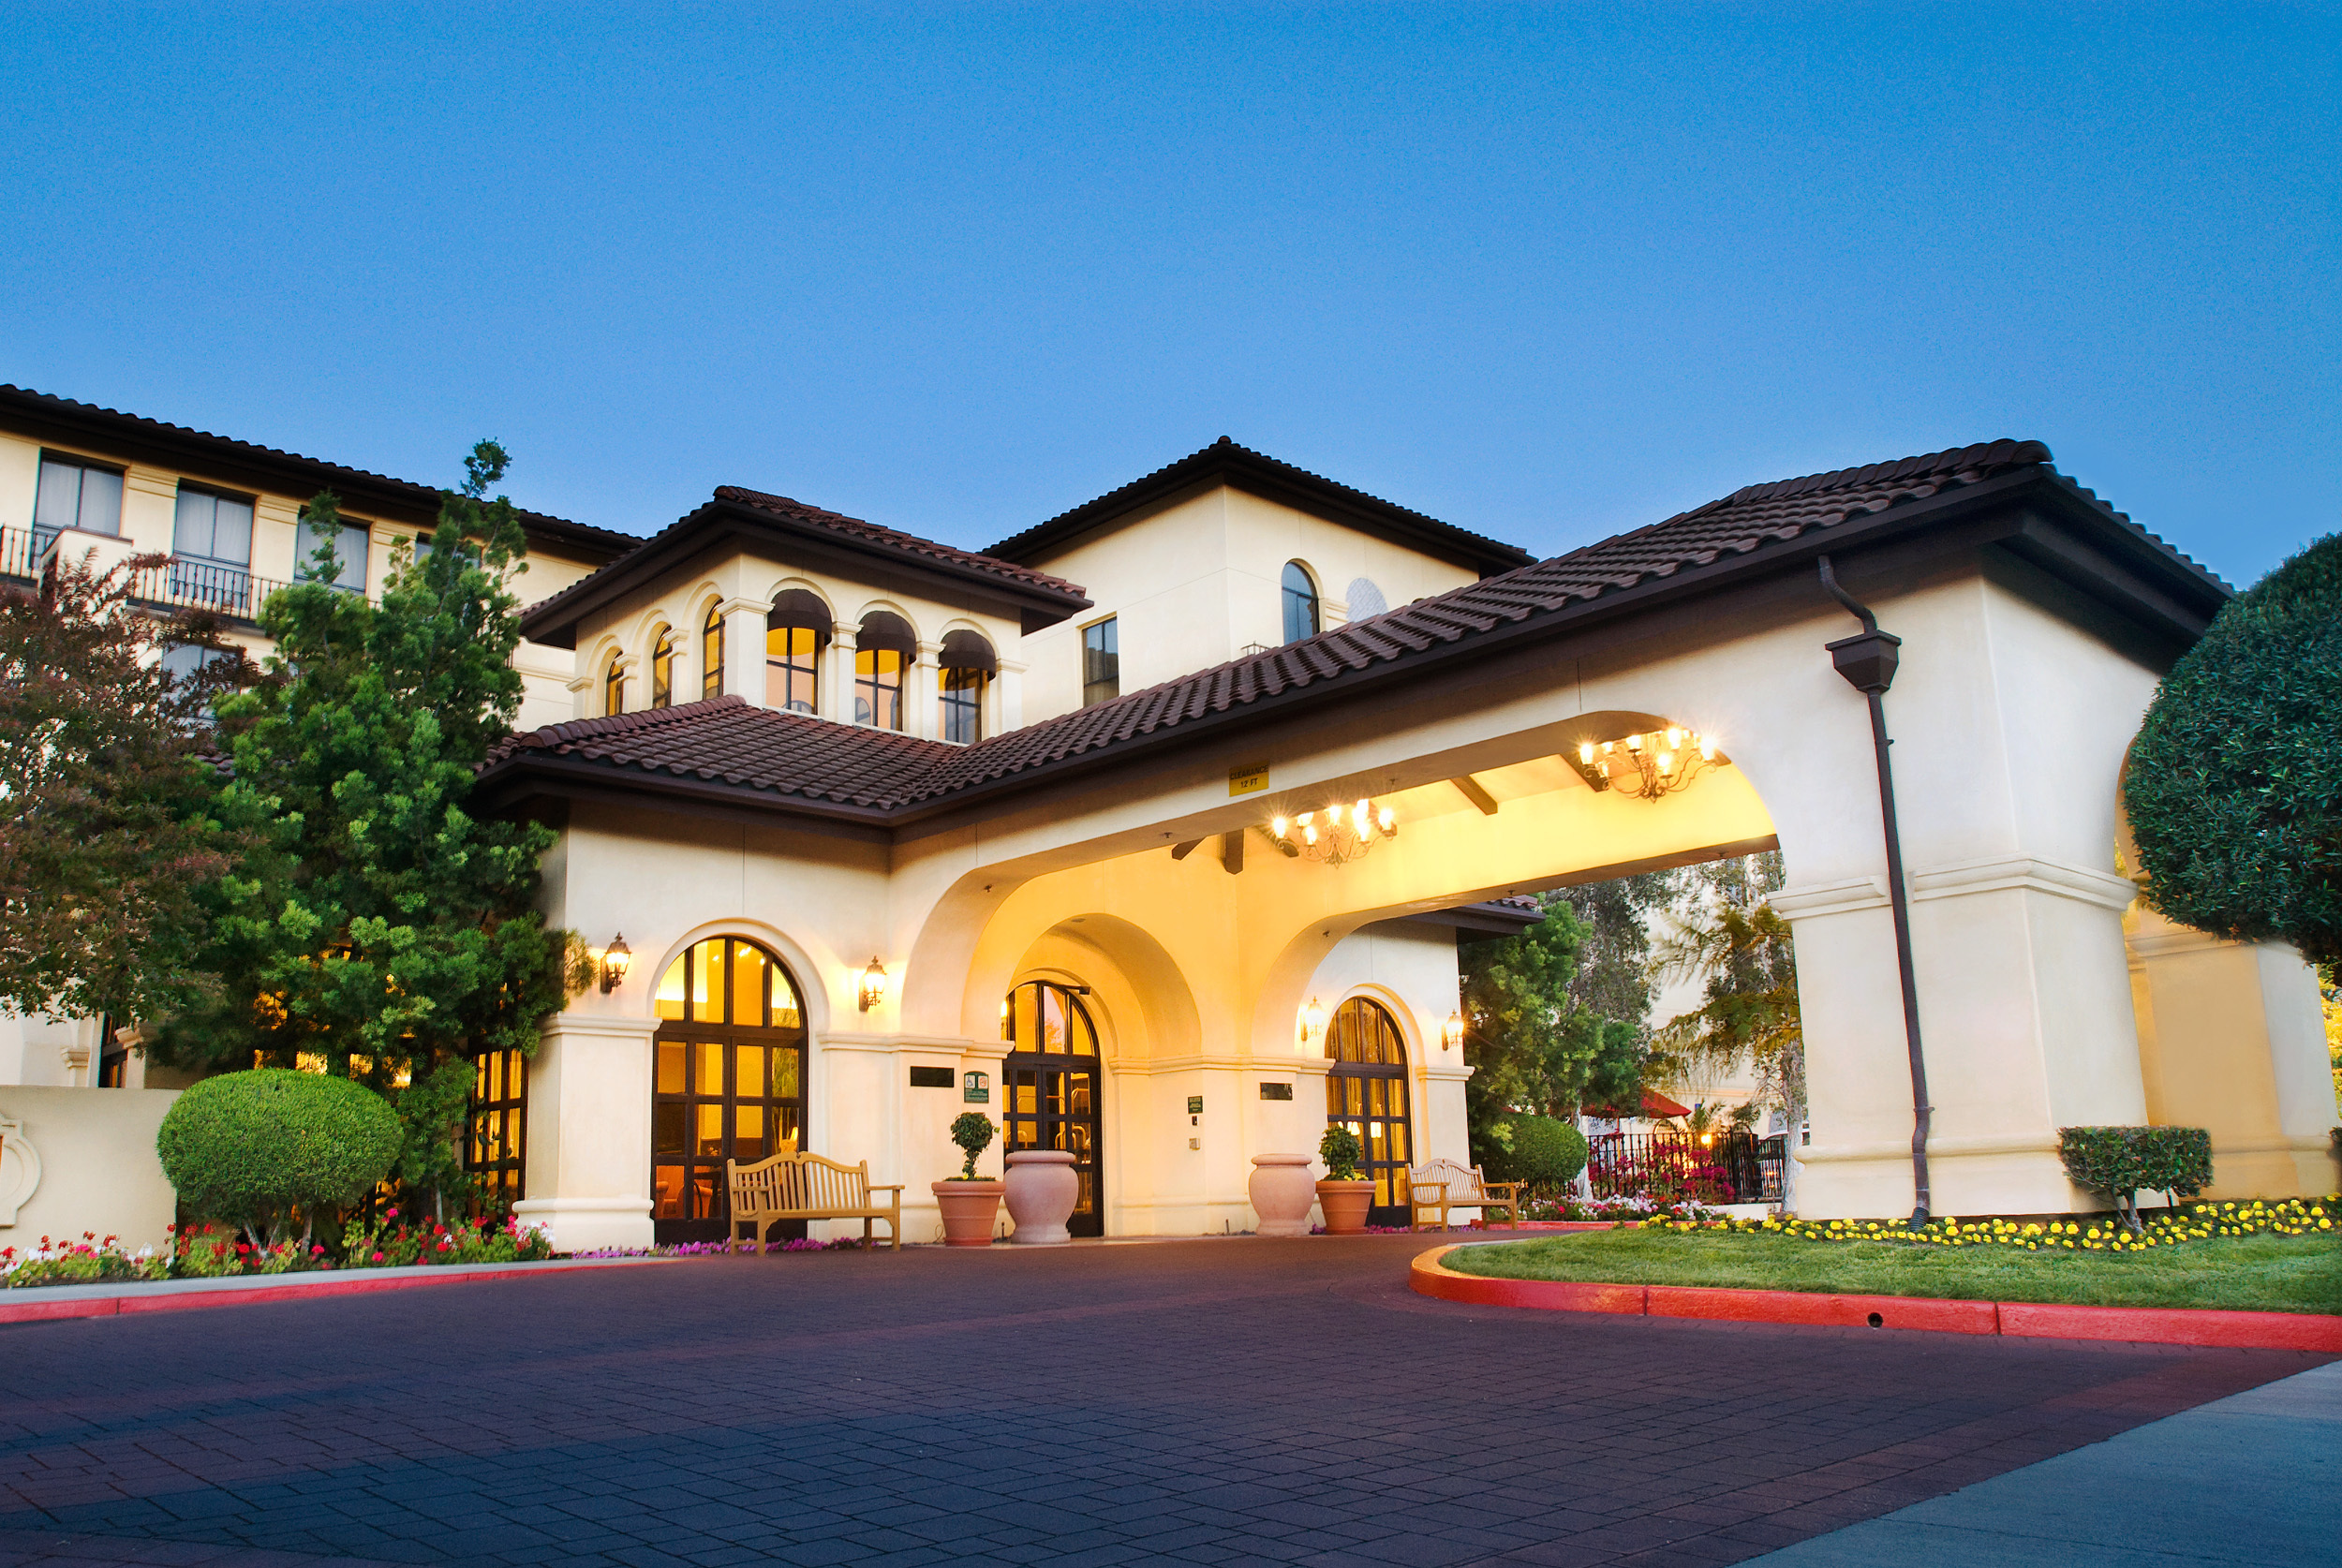 Photo of Hilton Garden Inn Cupertino, Cupertino, CA